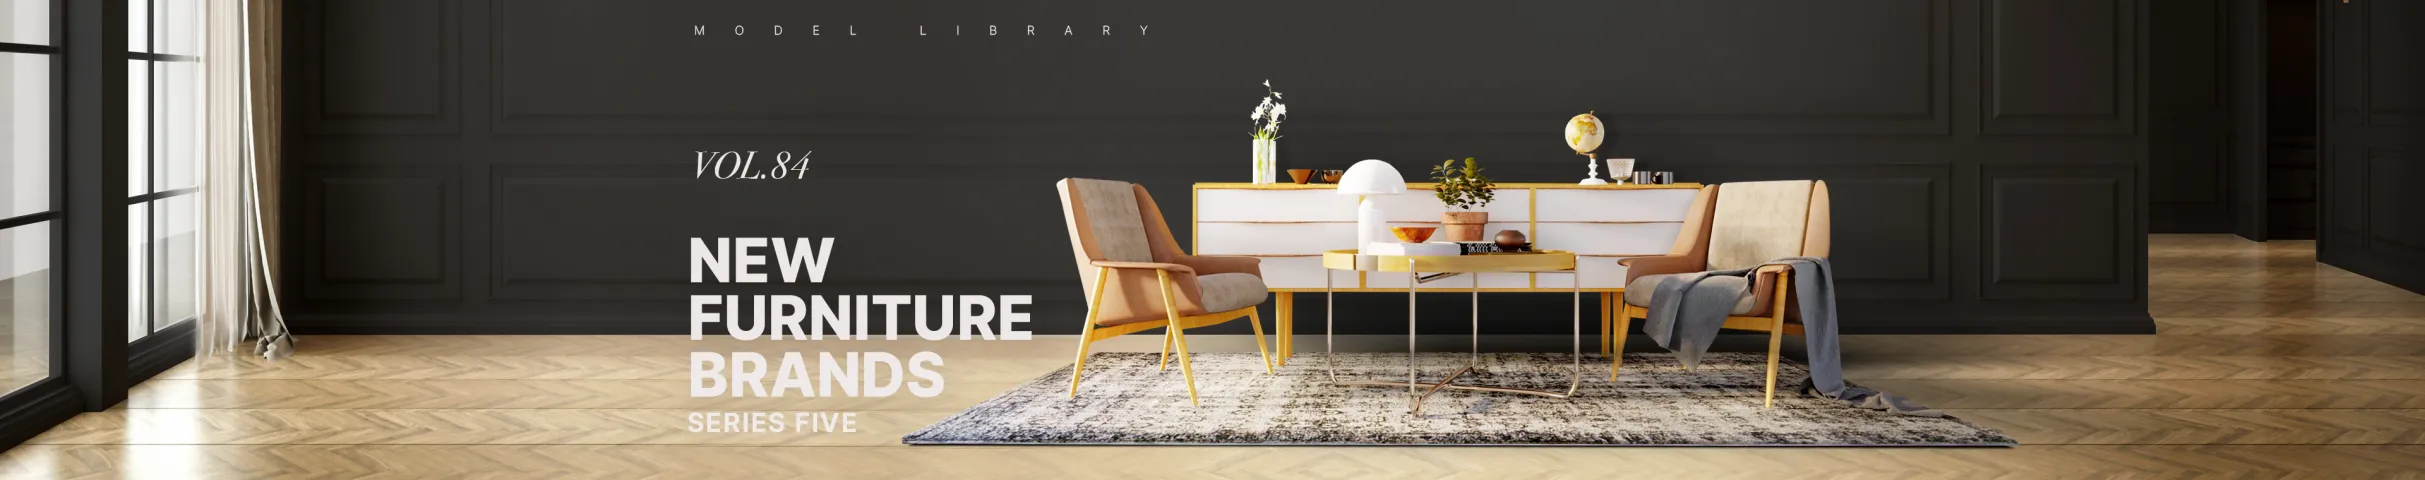 New Furniture Brands -5